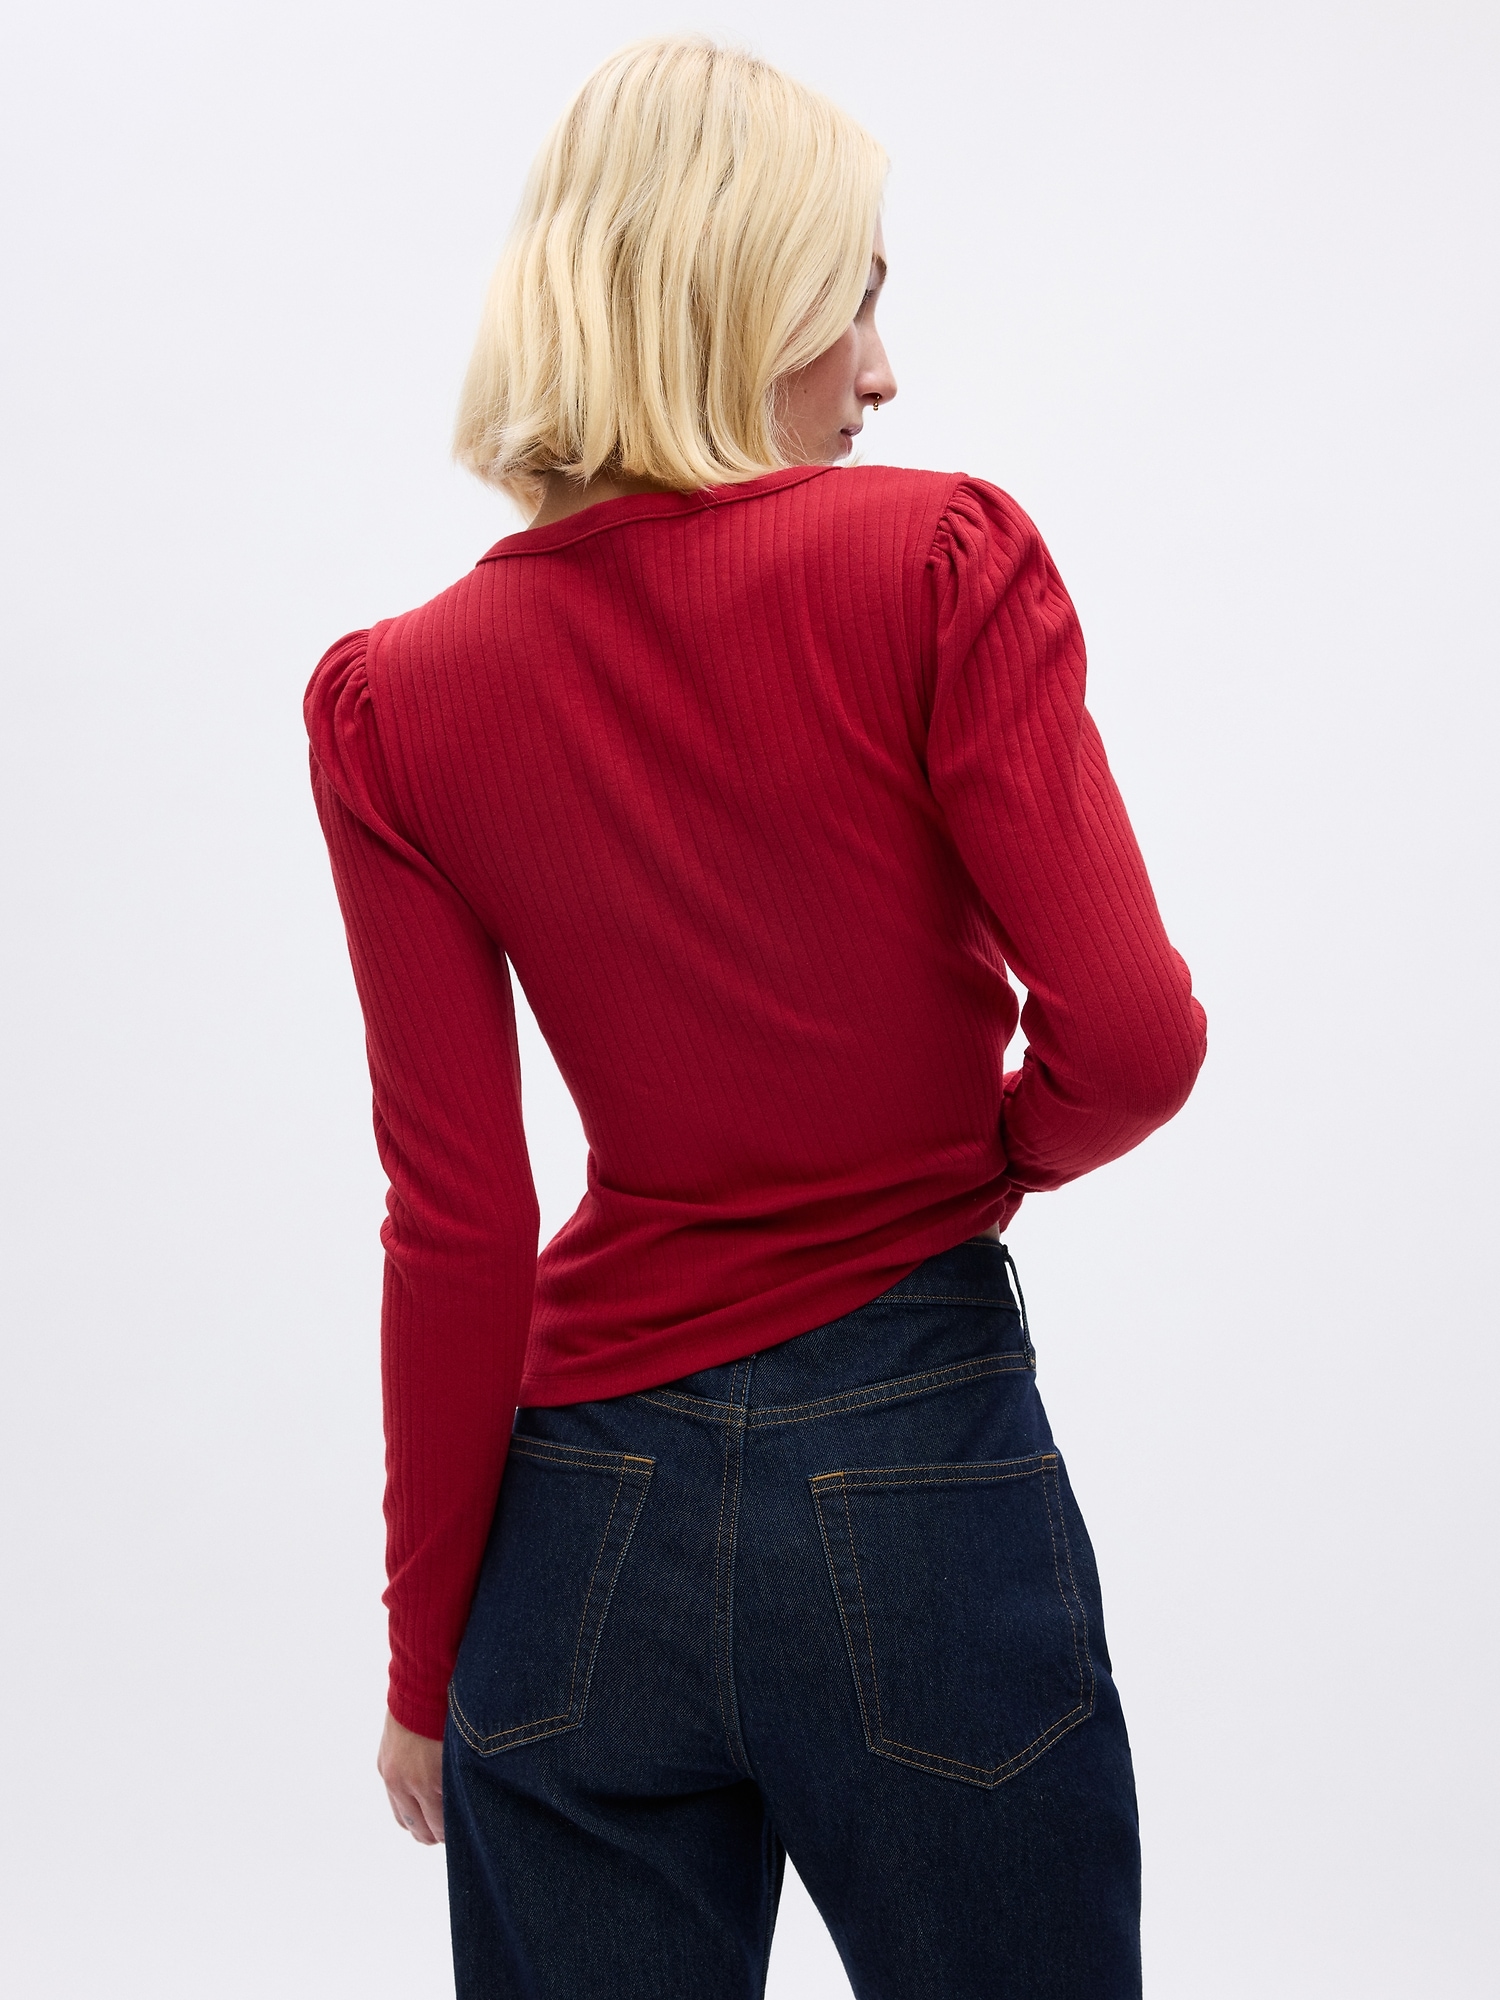 Gap Body Womens Open Front Cardigan Sweater Robe XS P… - Gem